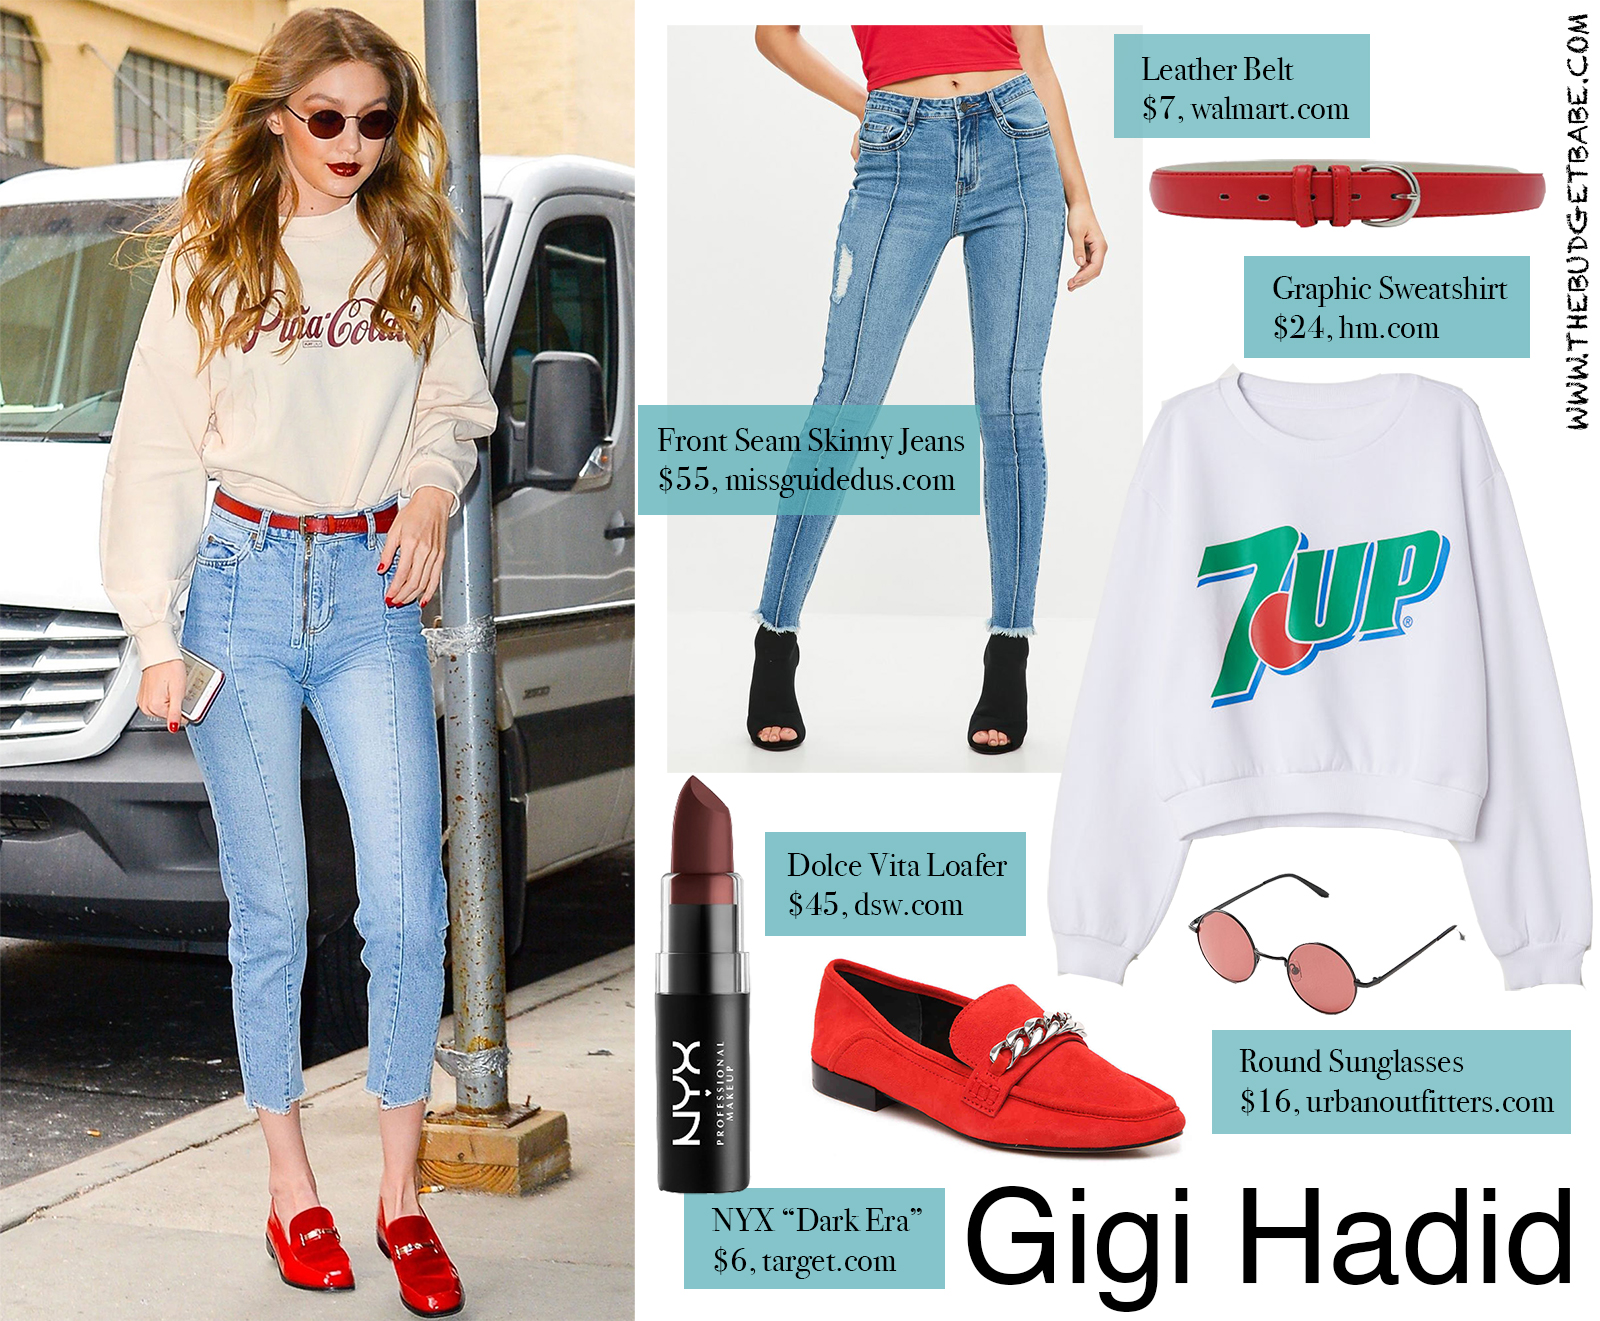 Gigi Hadid Pina Colada Sweatshirt + Red Shoes